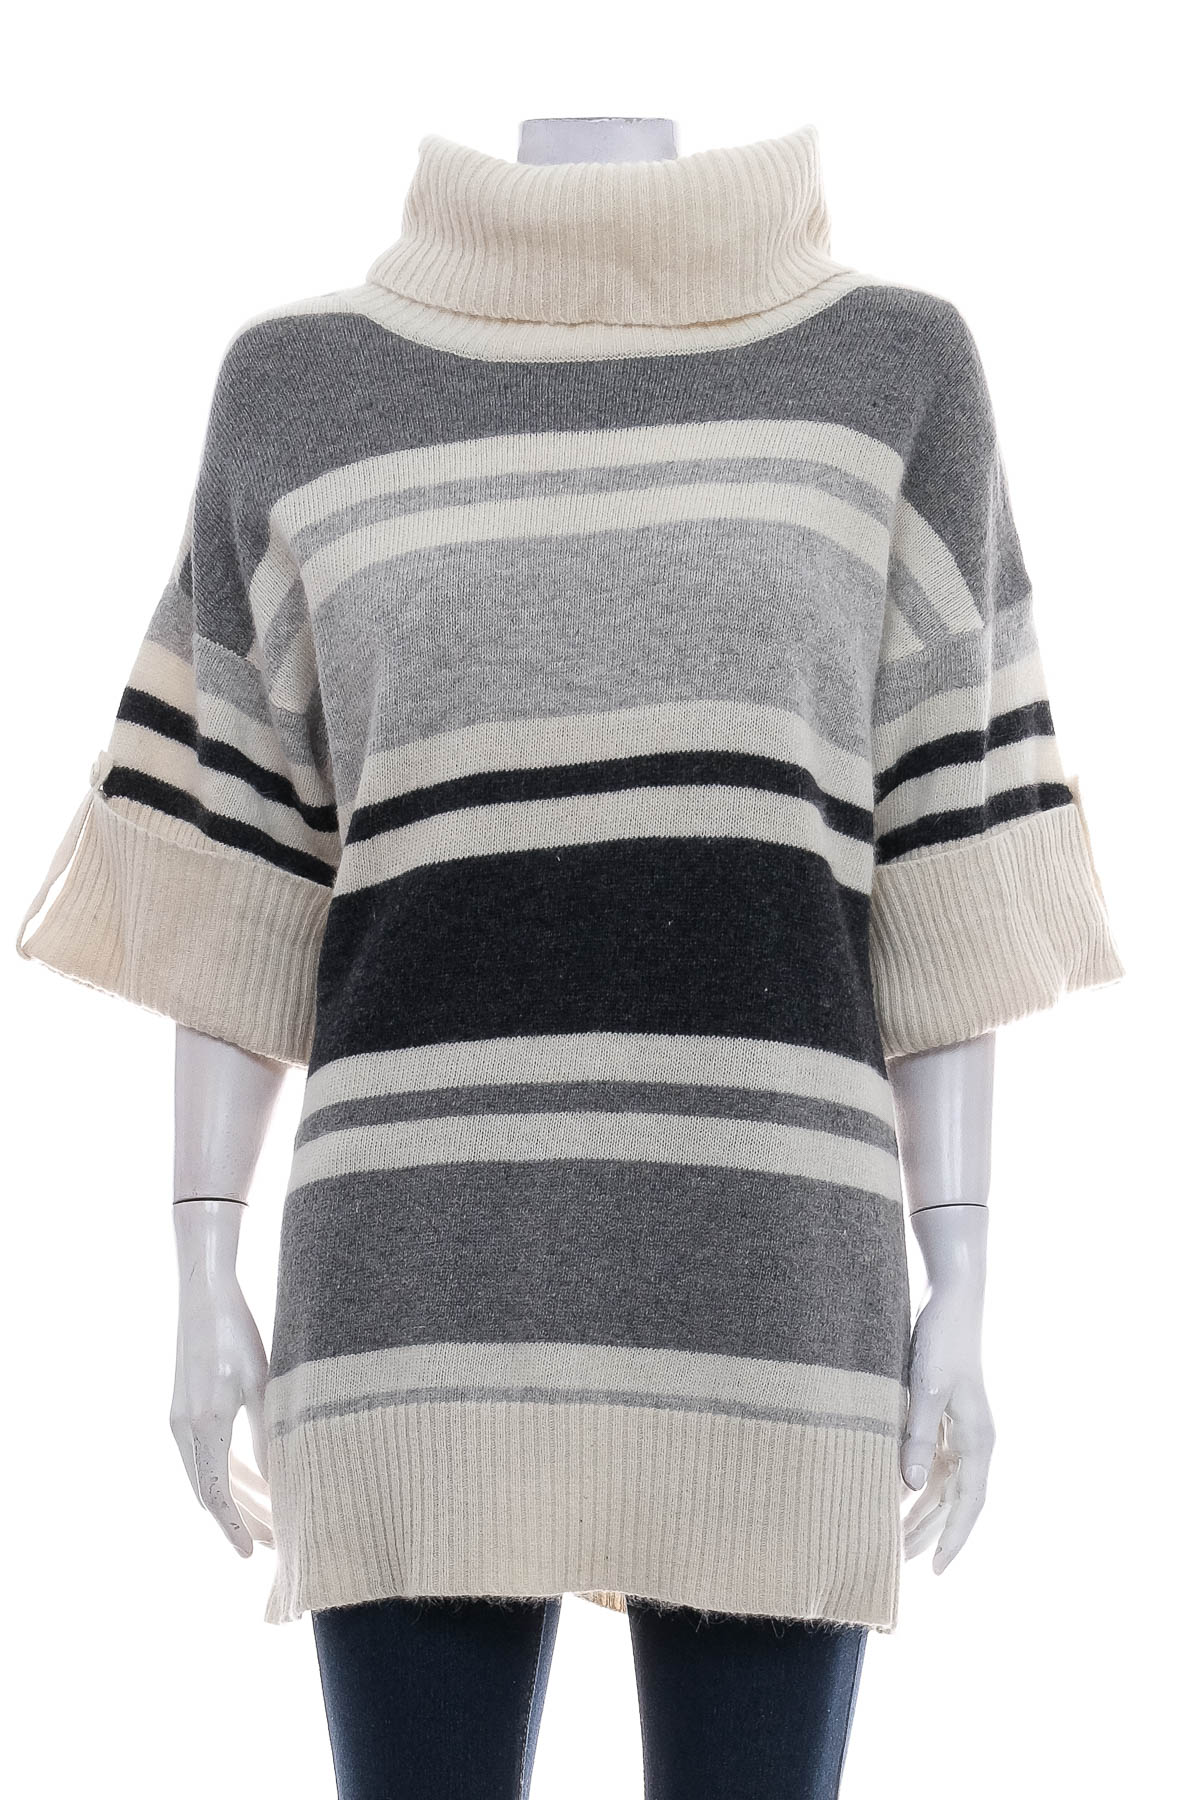 Women's sweater - Avellini - 0